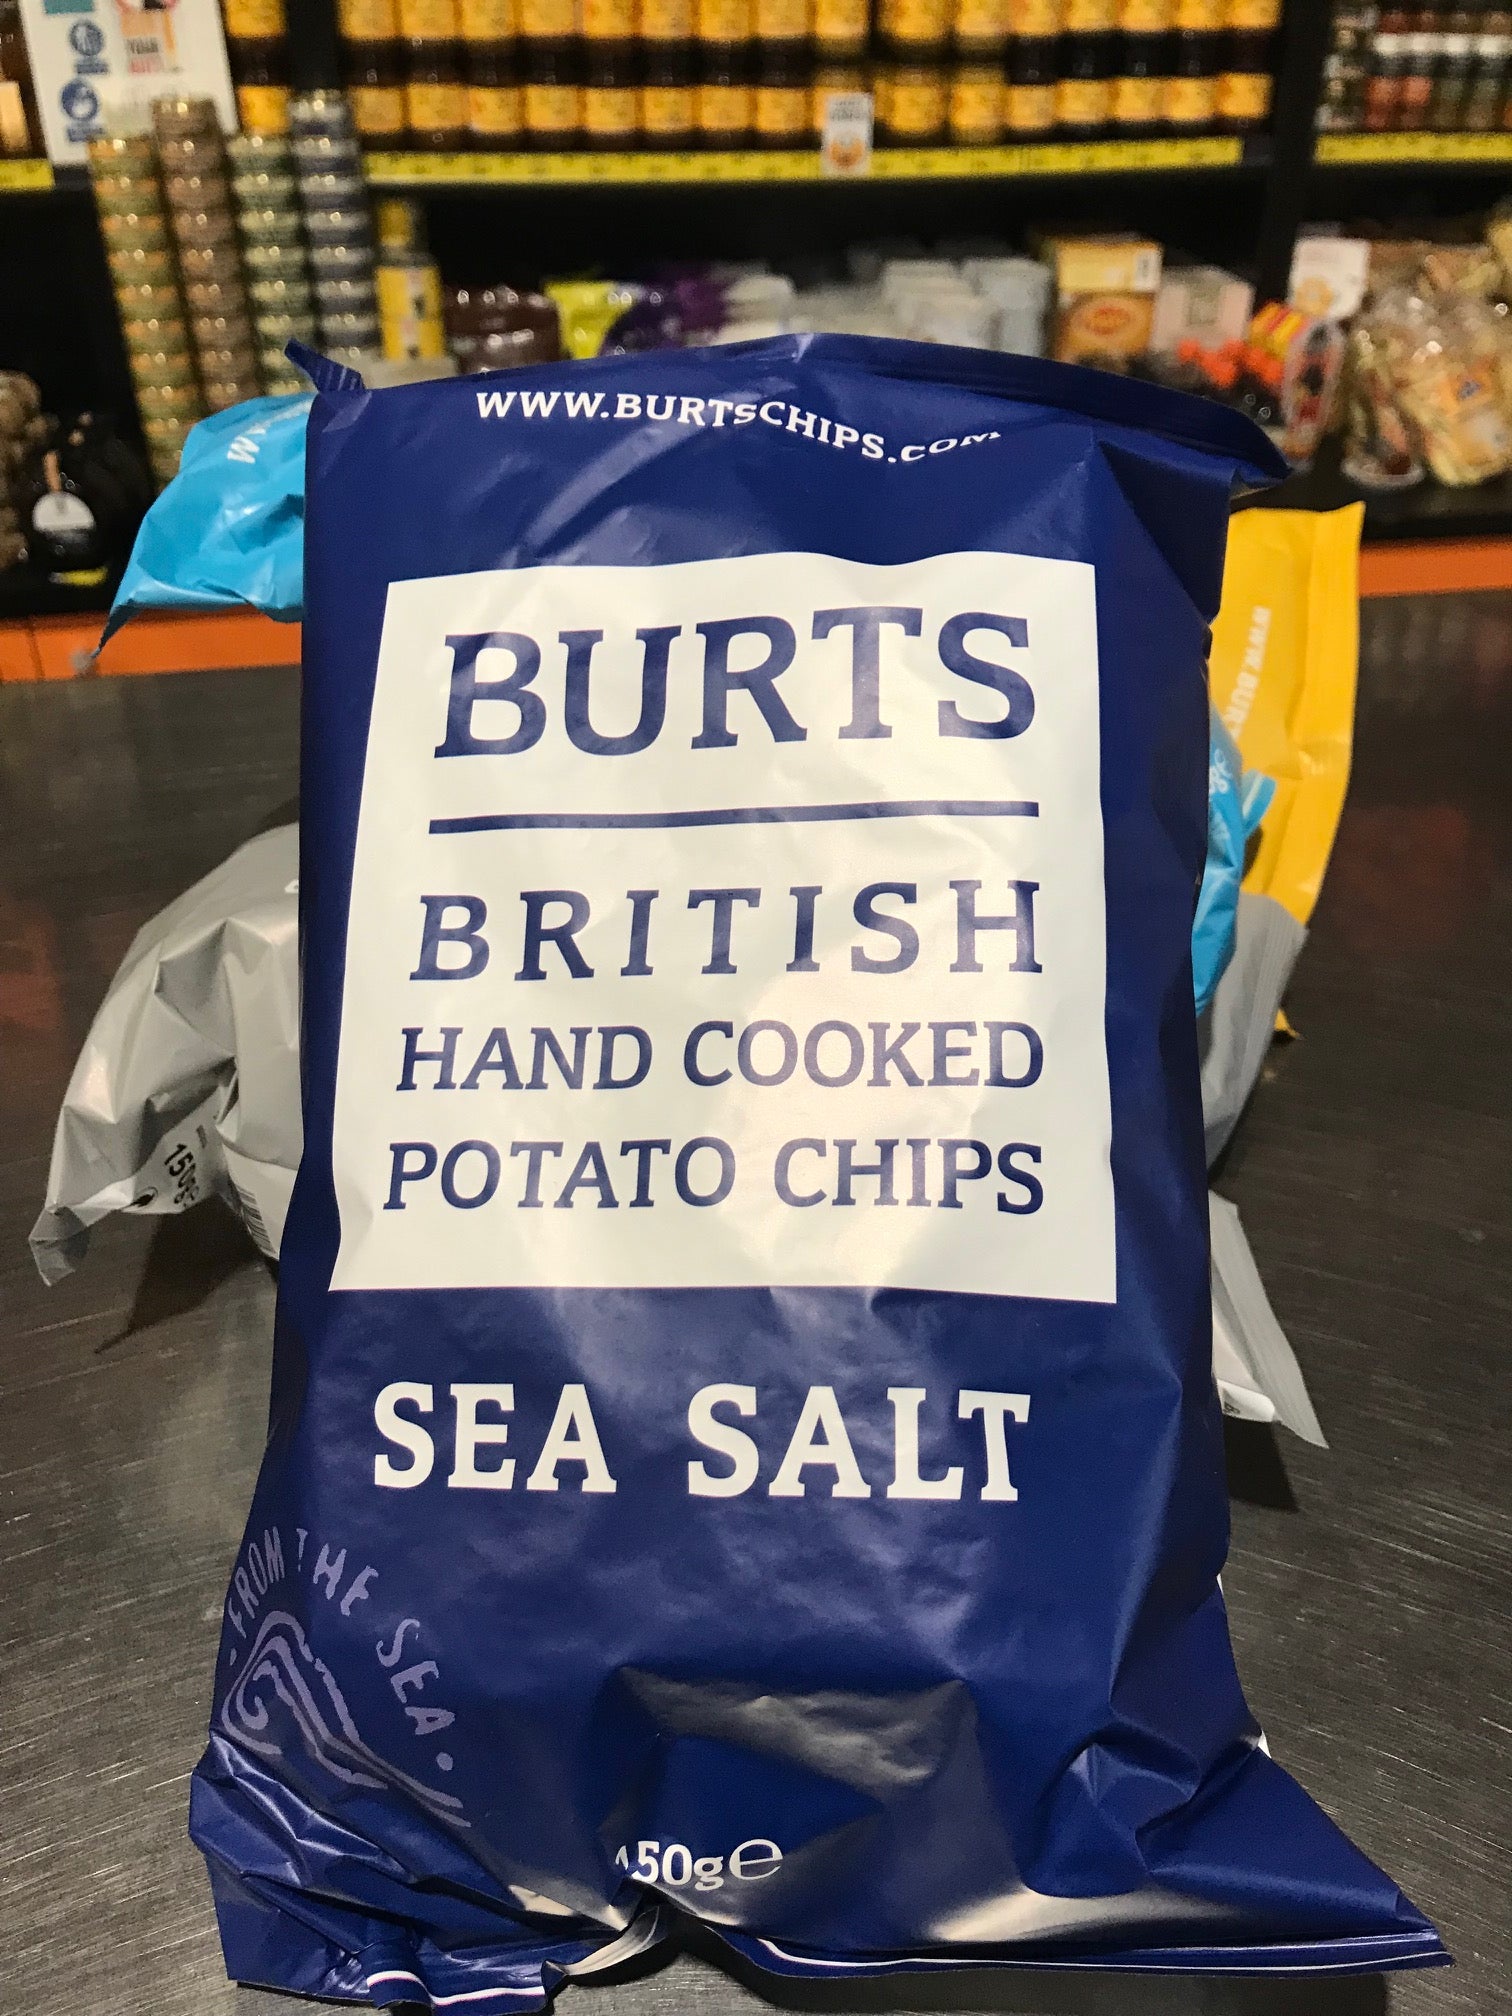 Burts - Sea Salt - British Hand Cooked Potato Chips - $6.99 including GST